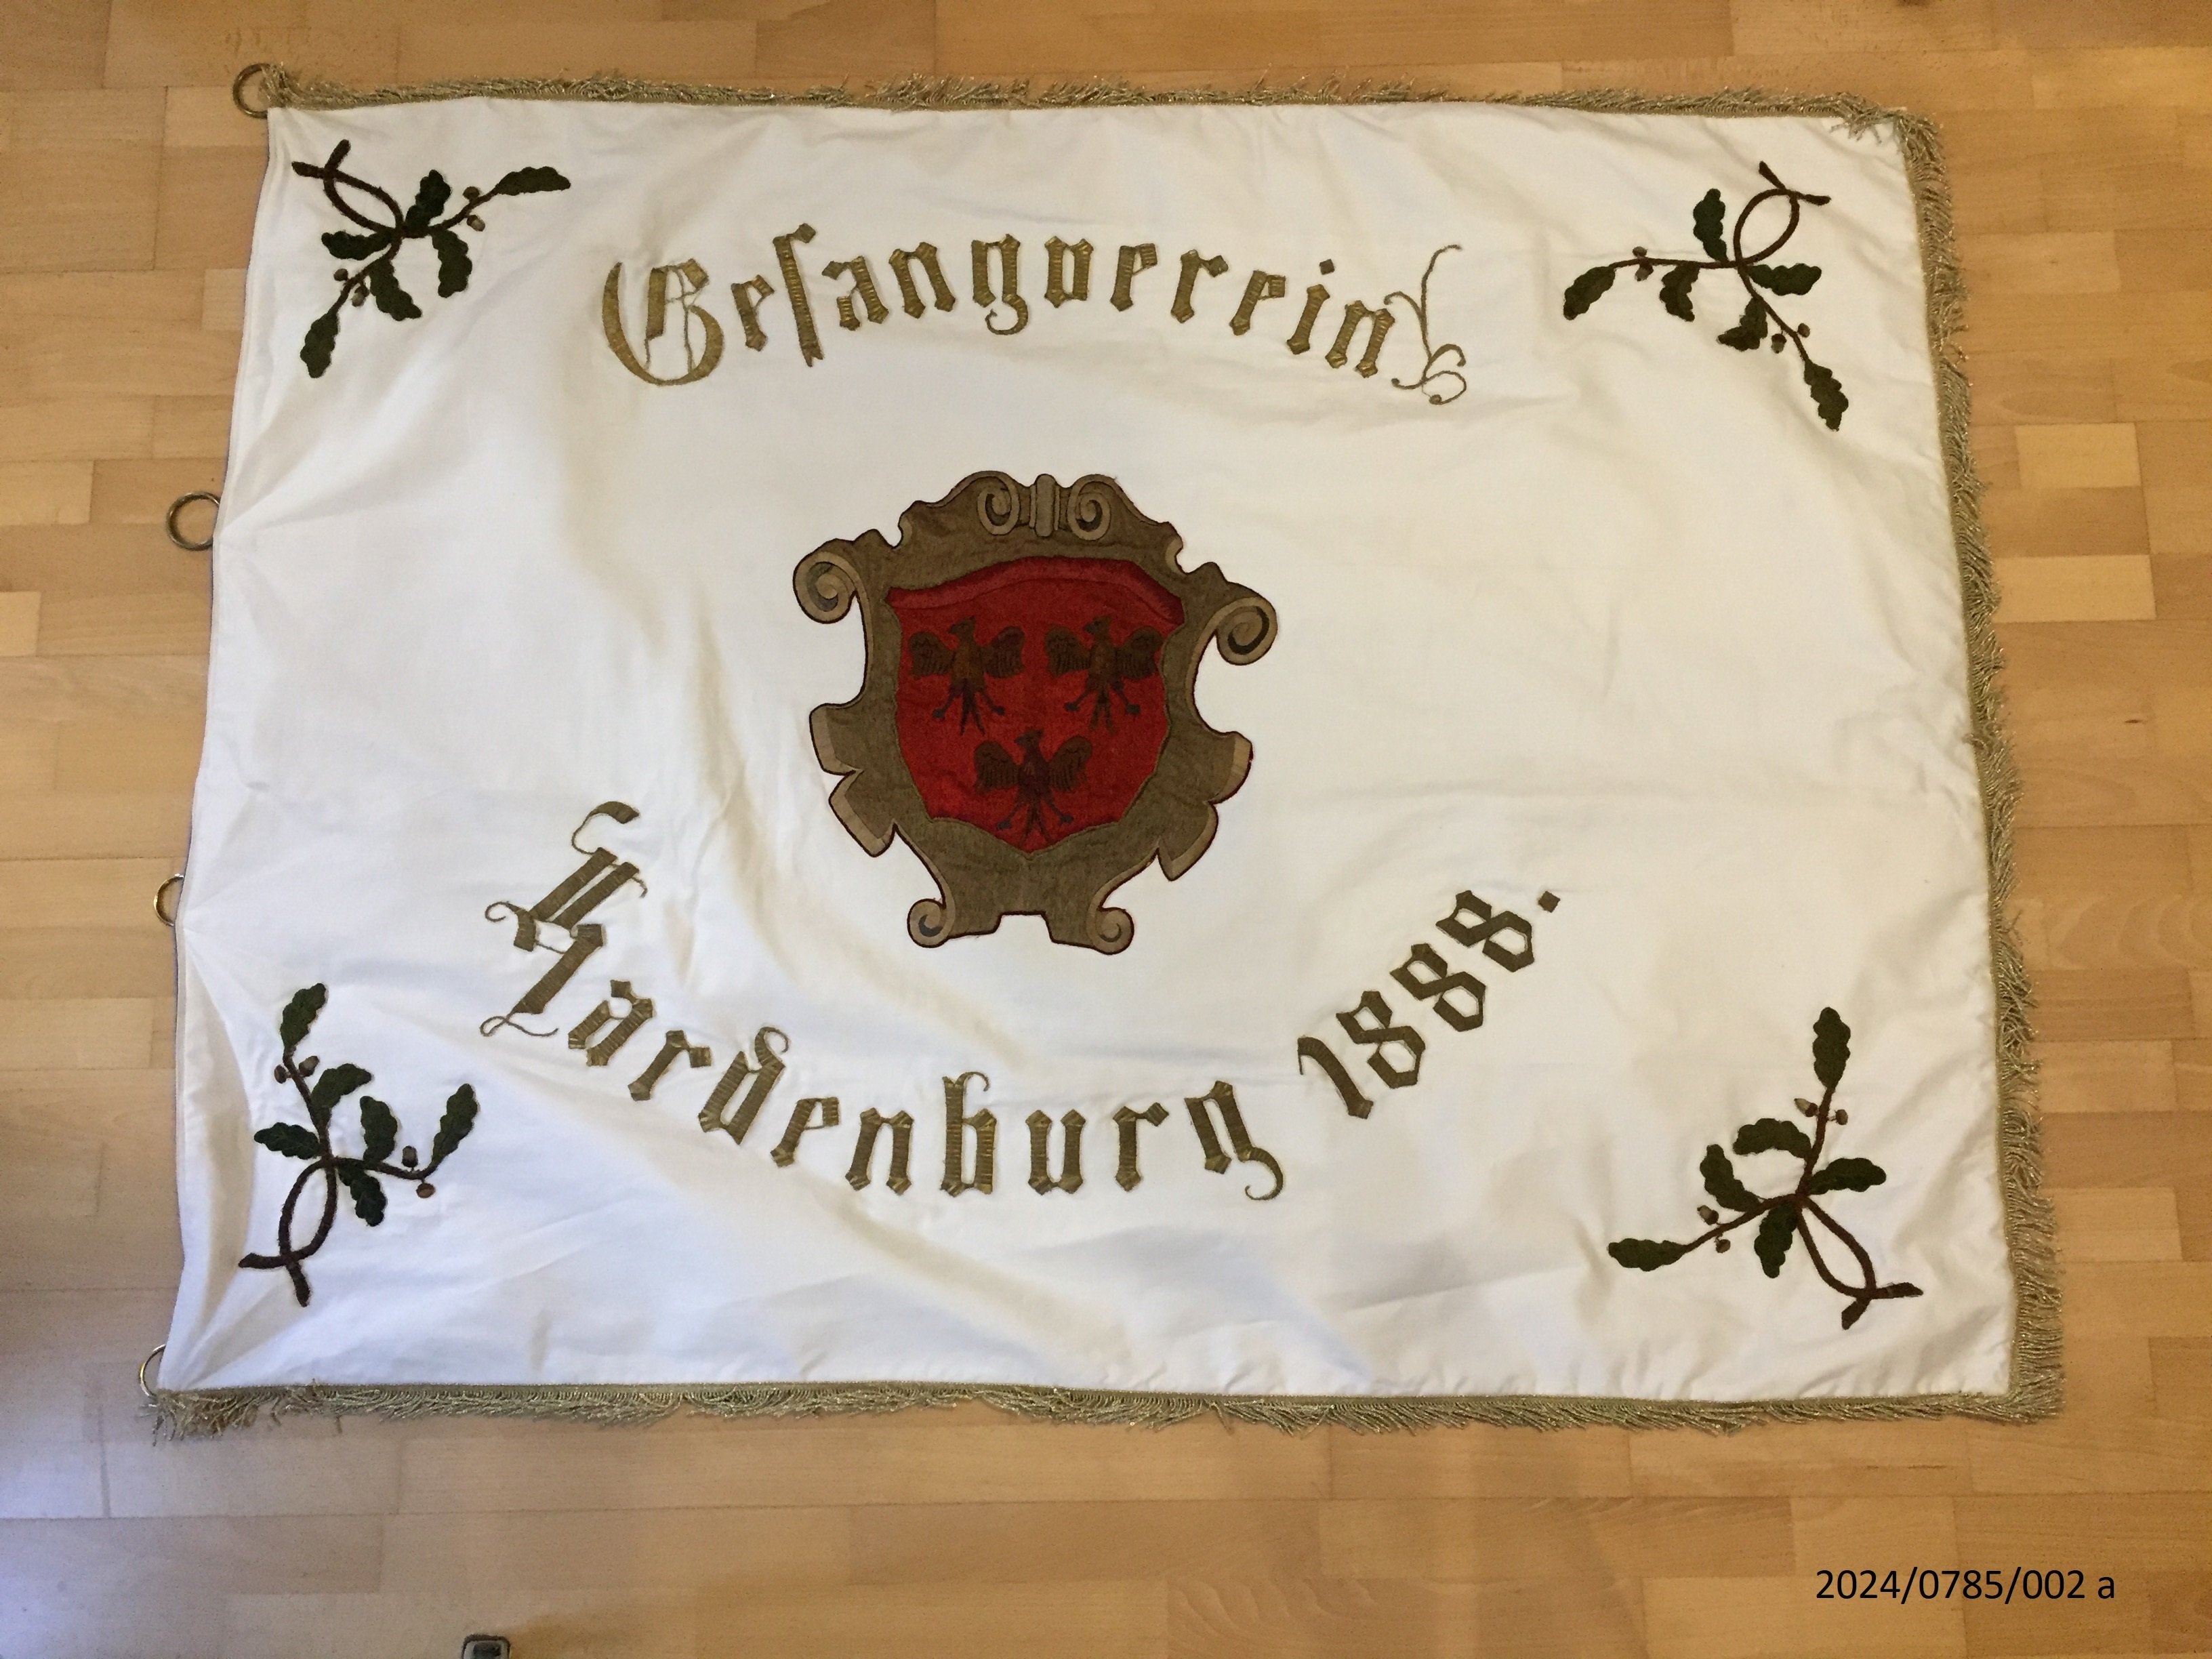 Fahne des Gesangsvereins Hardenburg, 1888 (Stadtmuseum Bad Dürkheim im Kulturzentrum Haus Catoir CC BY-NC-SA)